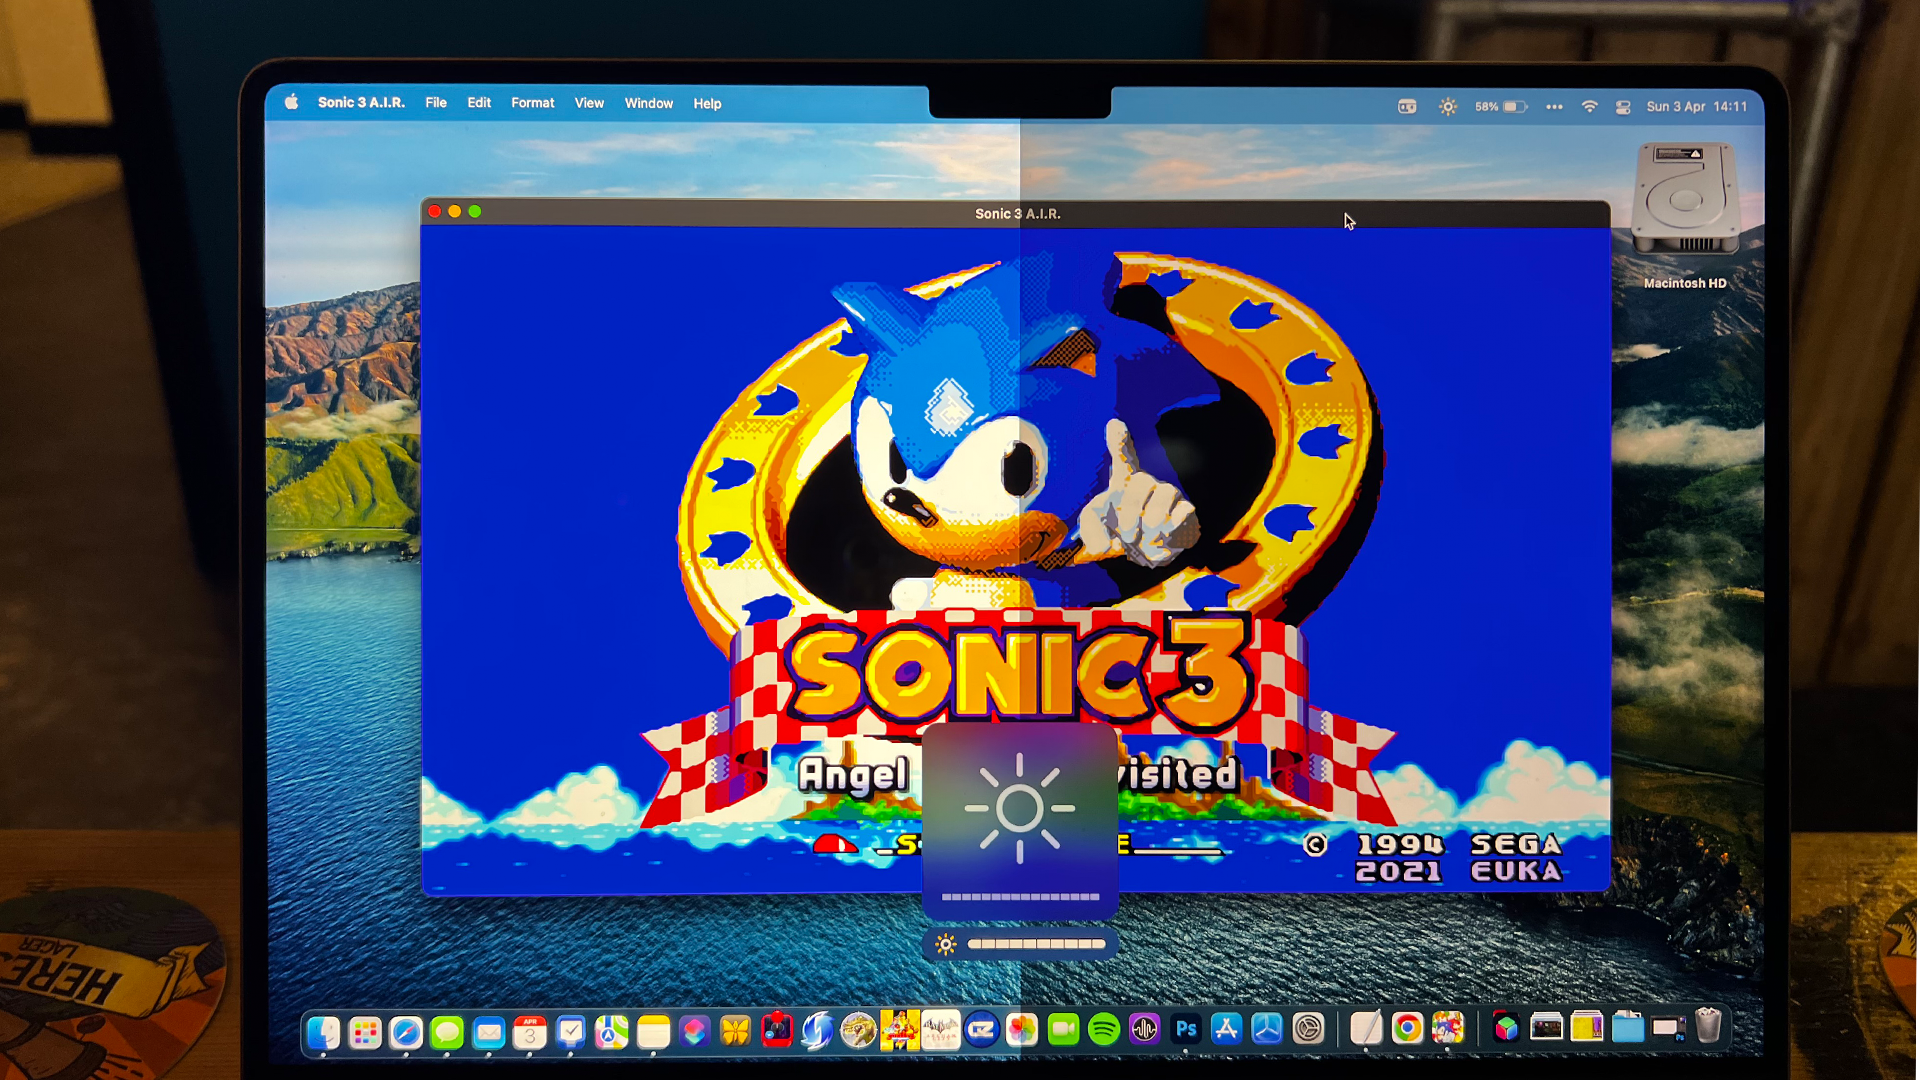 Sonic 3 A.I.R on Vivid